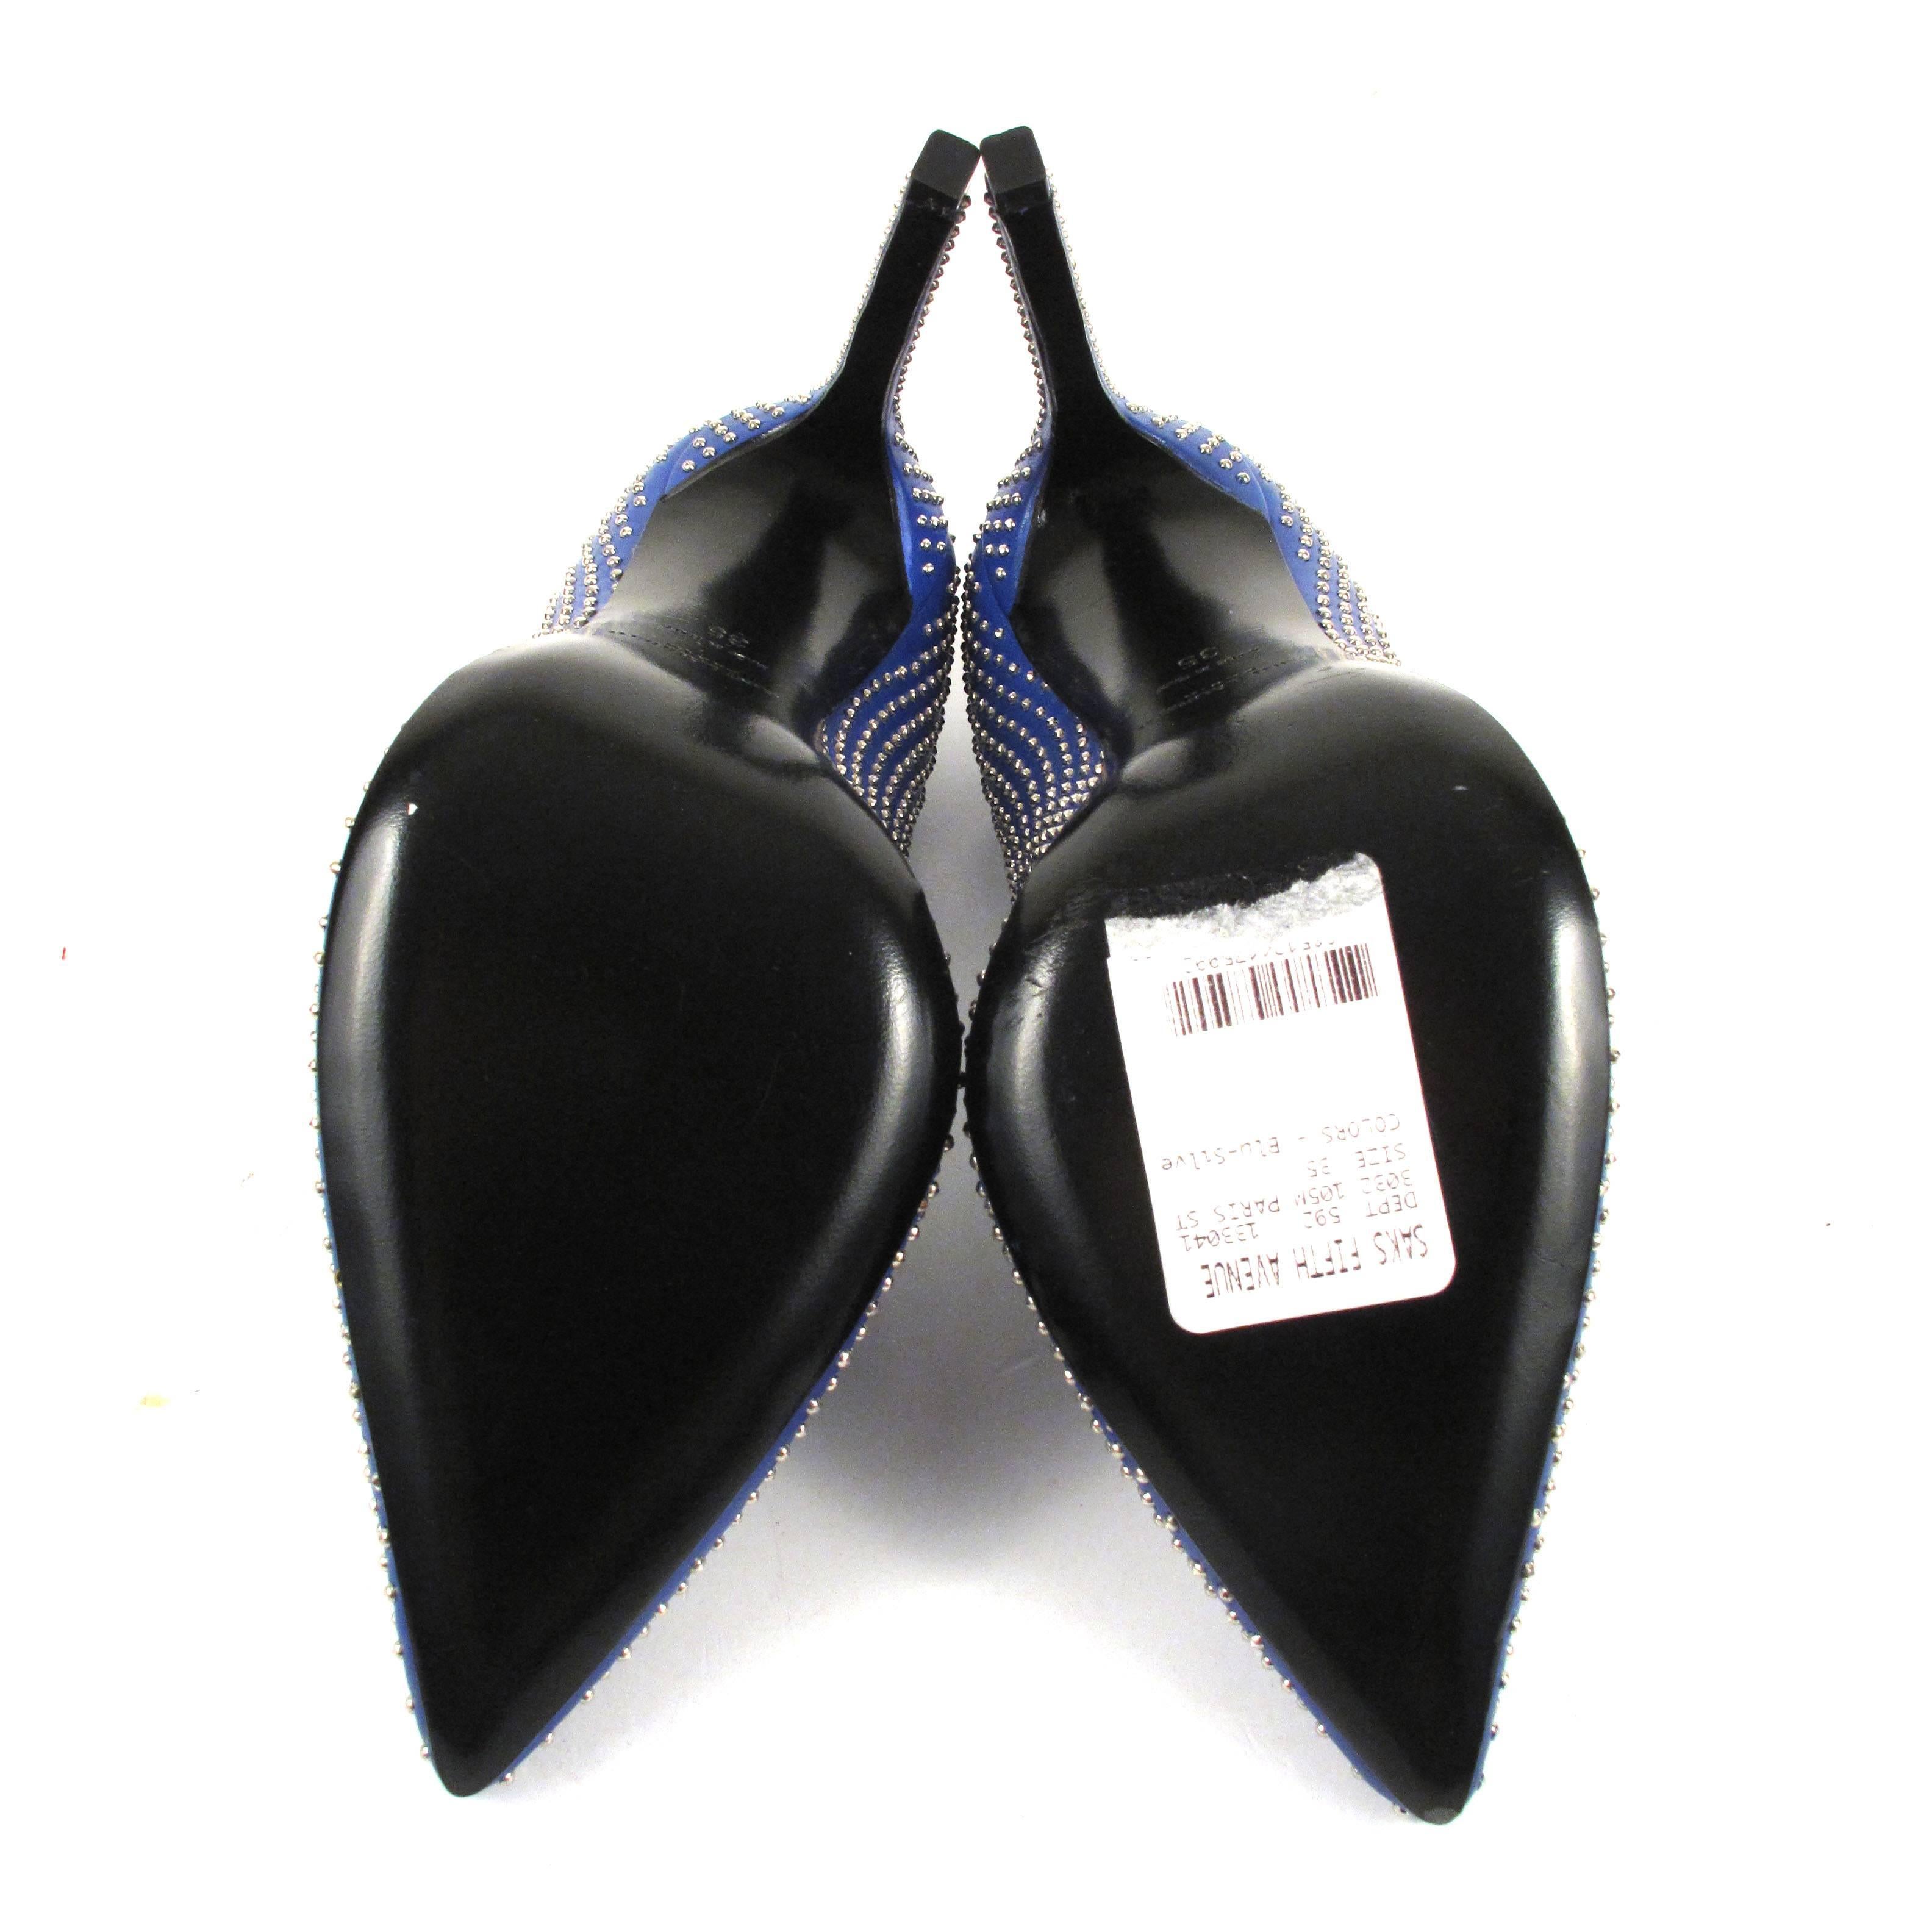 Saint Laurent Heels - New - 5 - 35 - Blue Leather Silver Studded Pumps Shoes 5.5 2